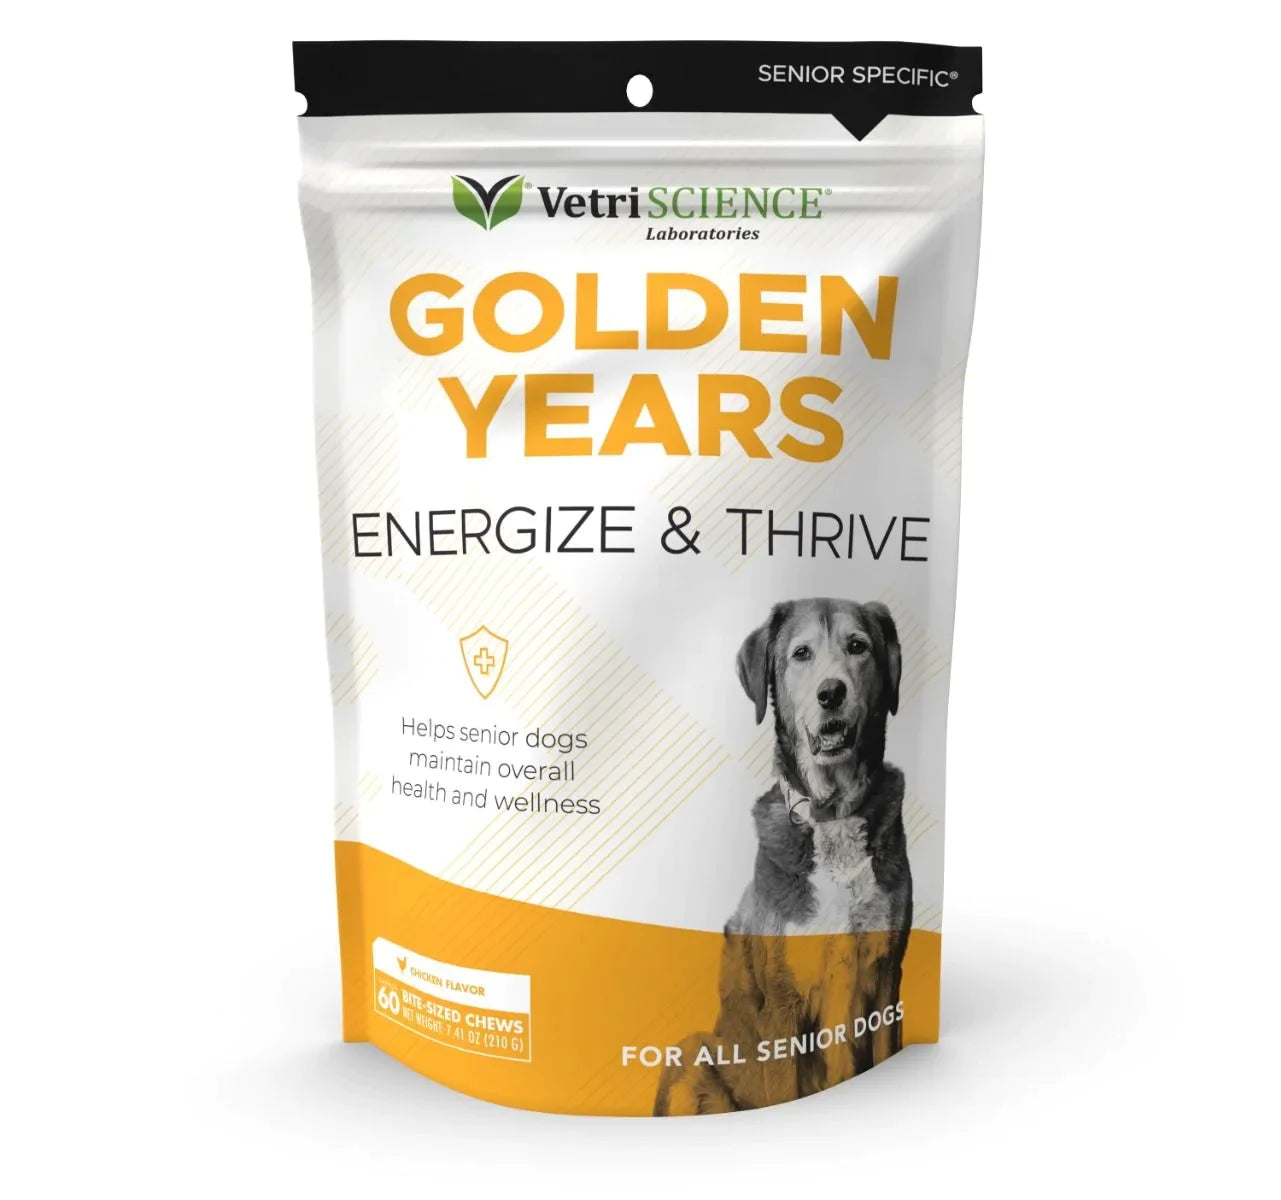 Vetriscience - Golden Years Energize & Thrive Multivitamin for Senior Dogs (60 chews)